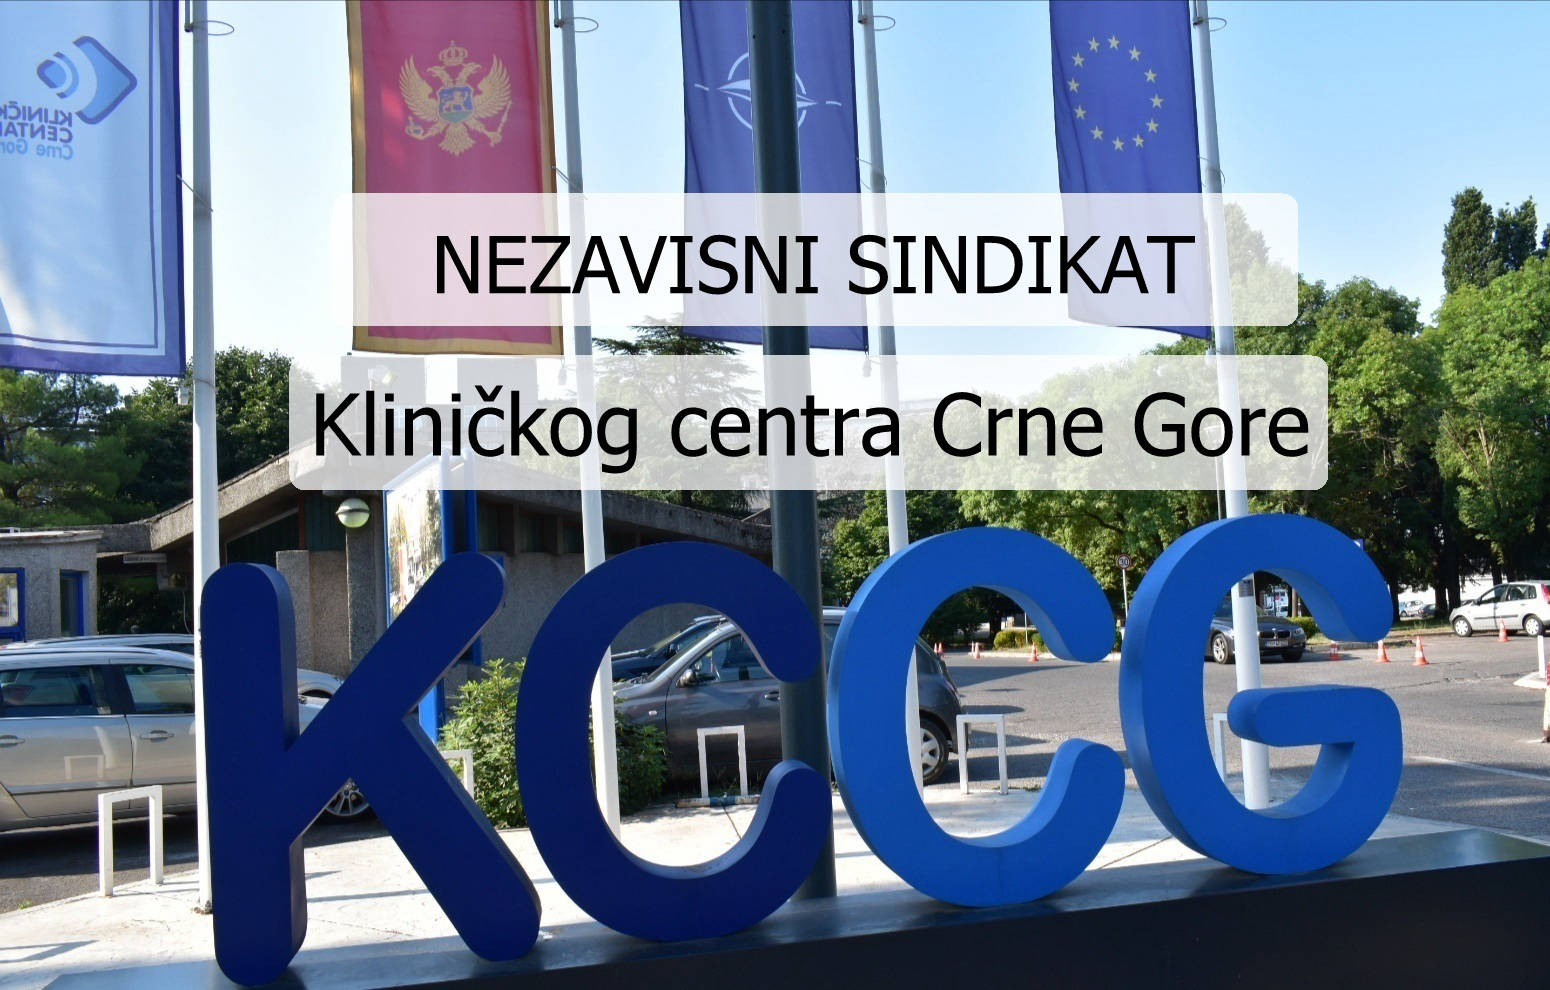 Nezavisni sindikat Kliničkog centra Crne Gore